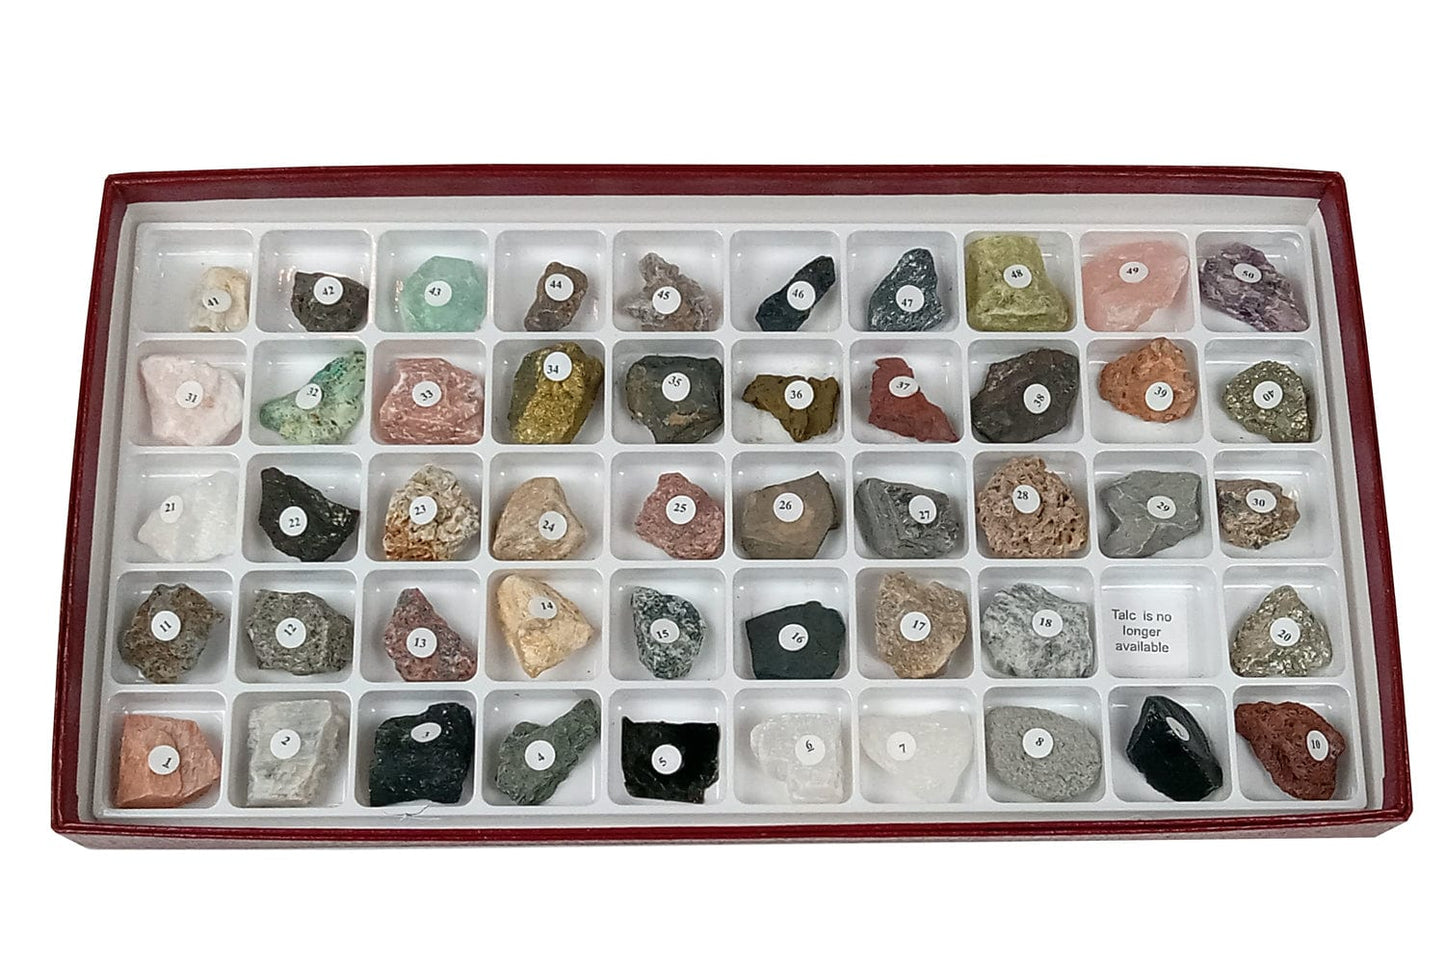 Arbor Scientific Classroom Collection of Rocks & Minerals